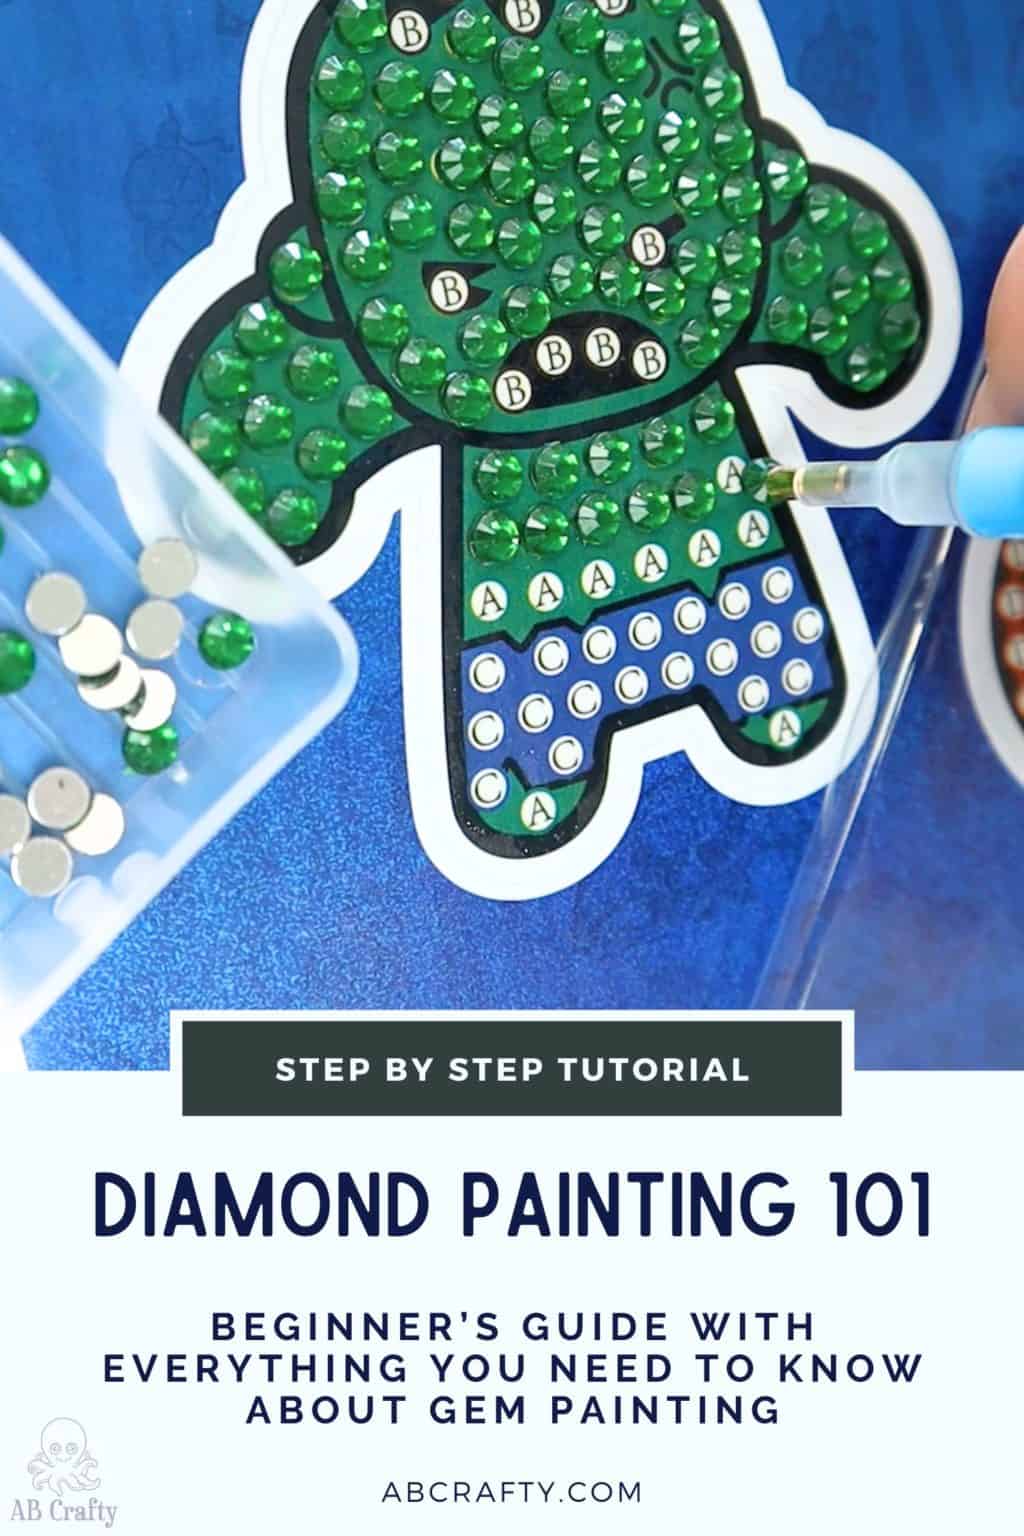 8PCS Diamond Painting Magnet Canvas Holder